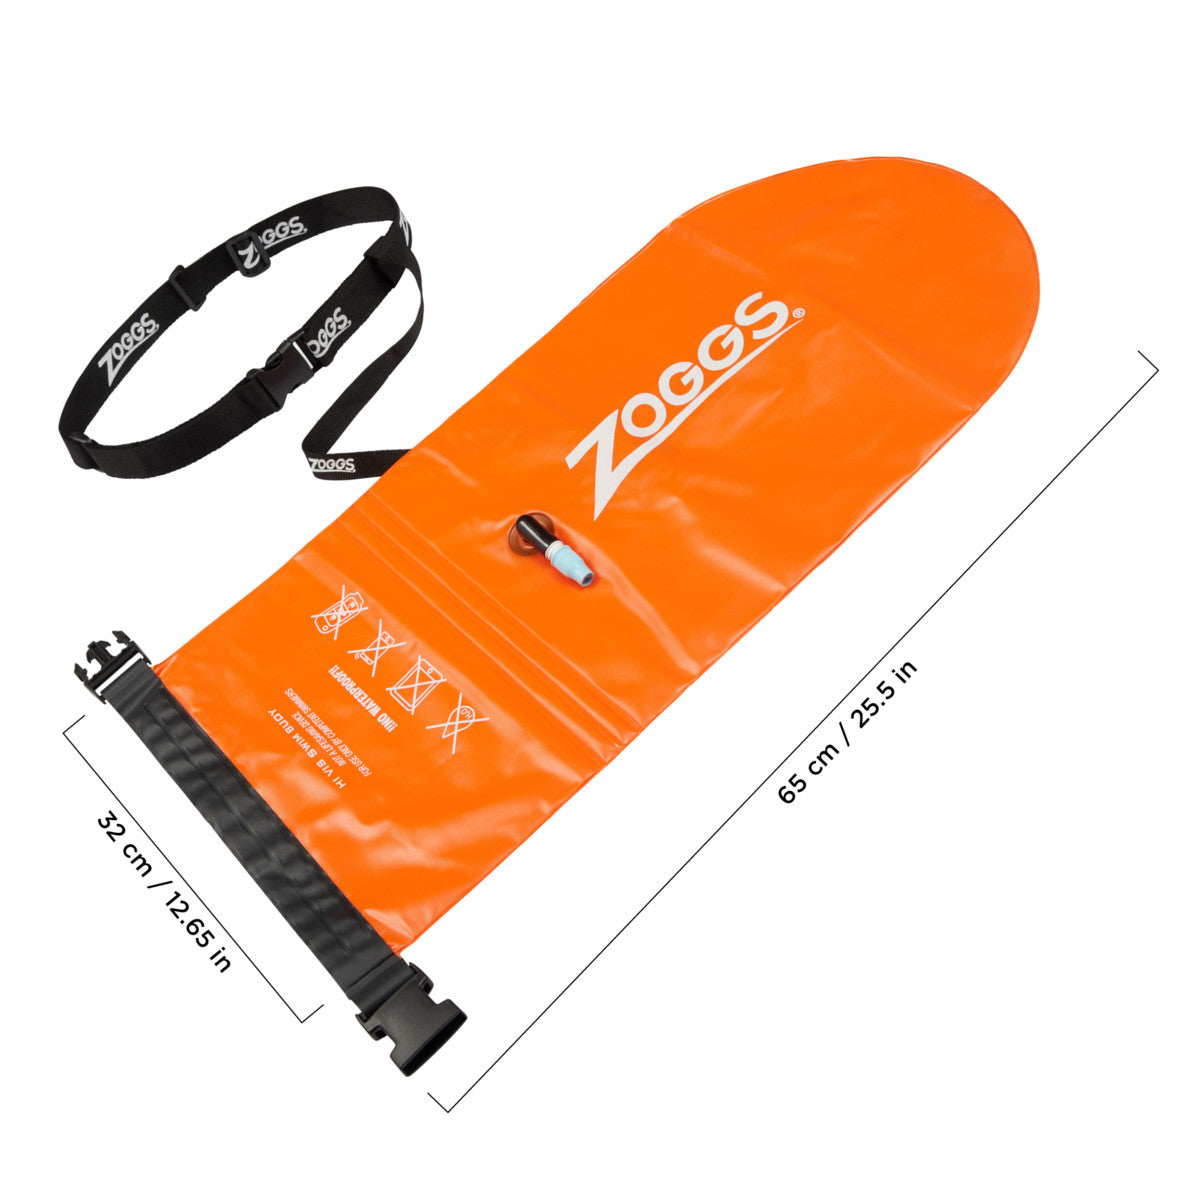 Zoggs Orange Hi Visibility Swim Buoy